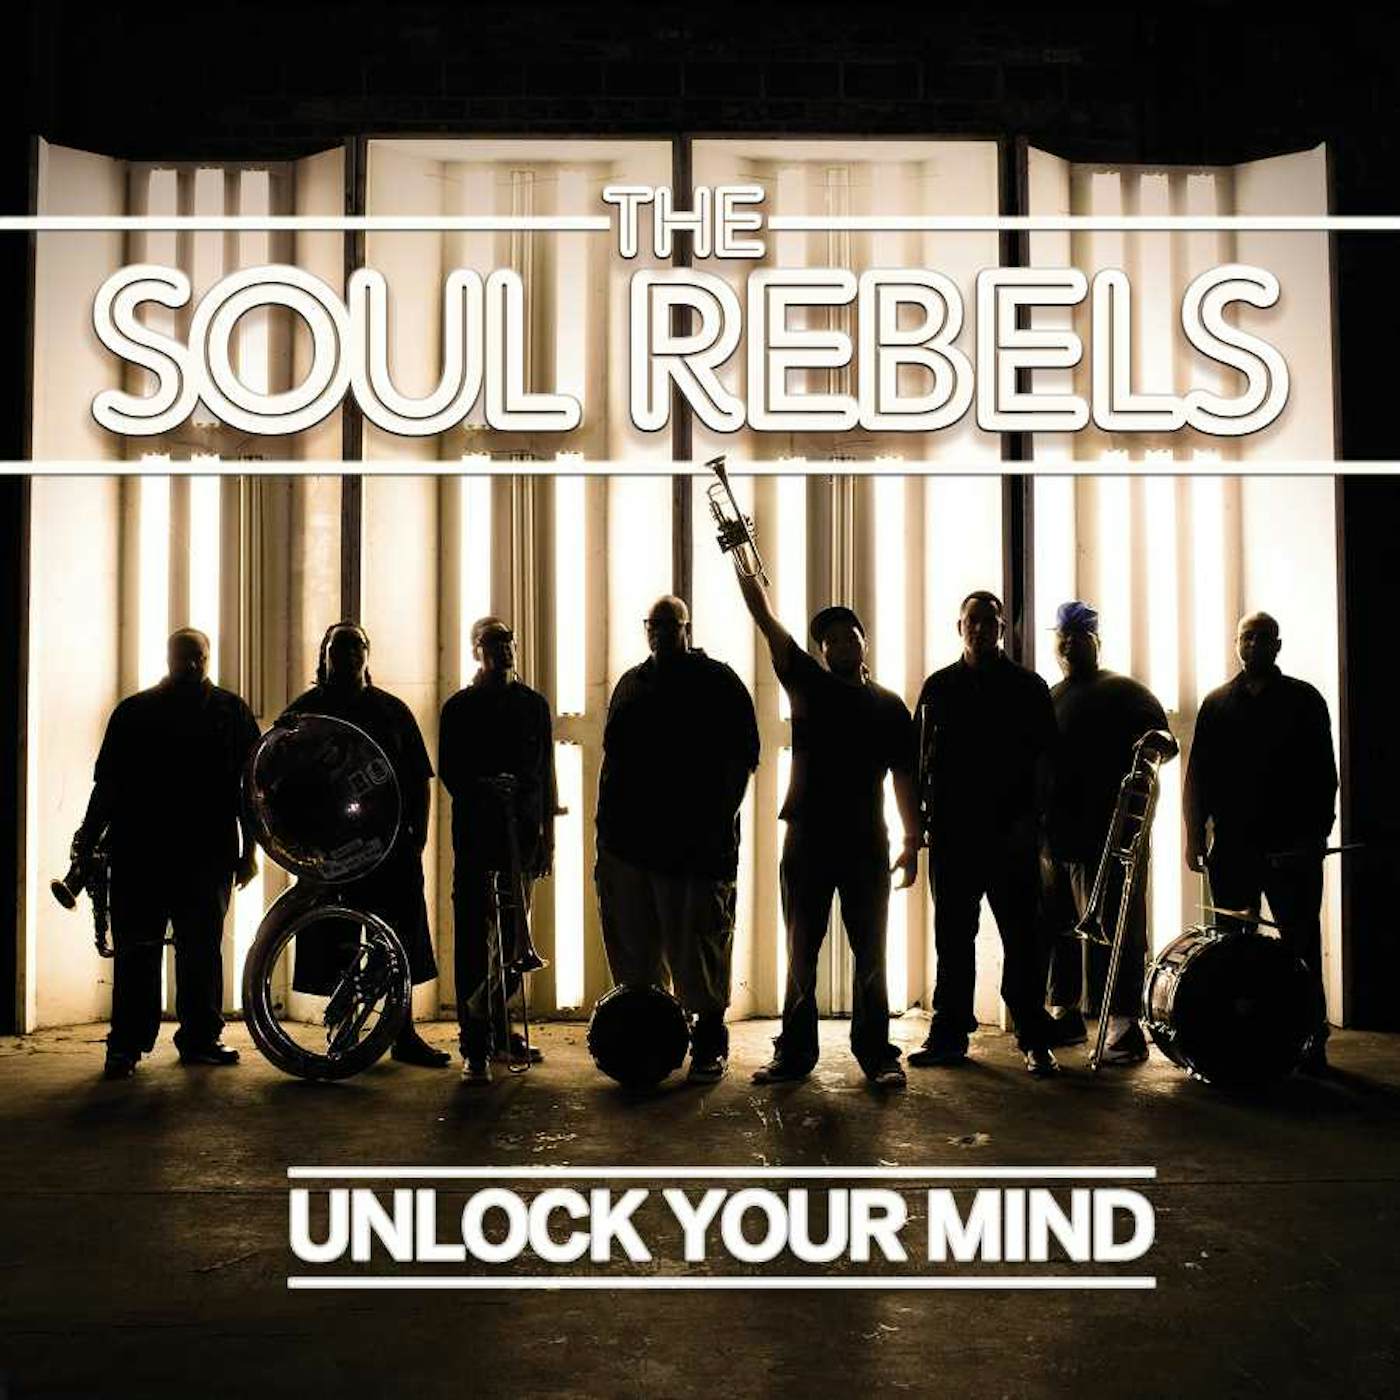 The Soul Rebels Unlock Your Mind CD